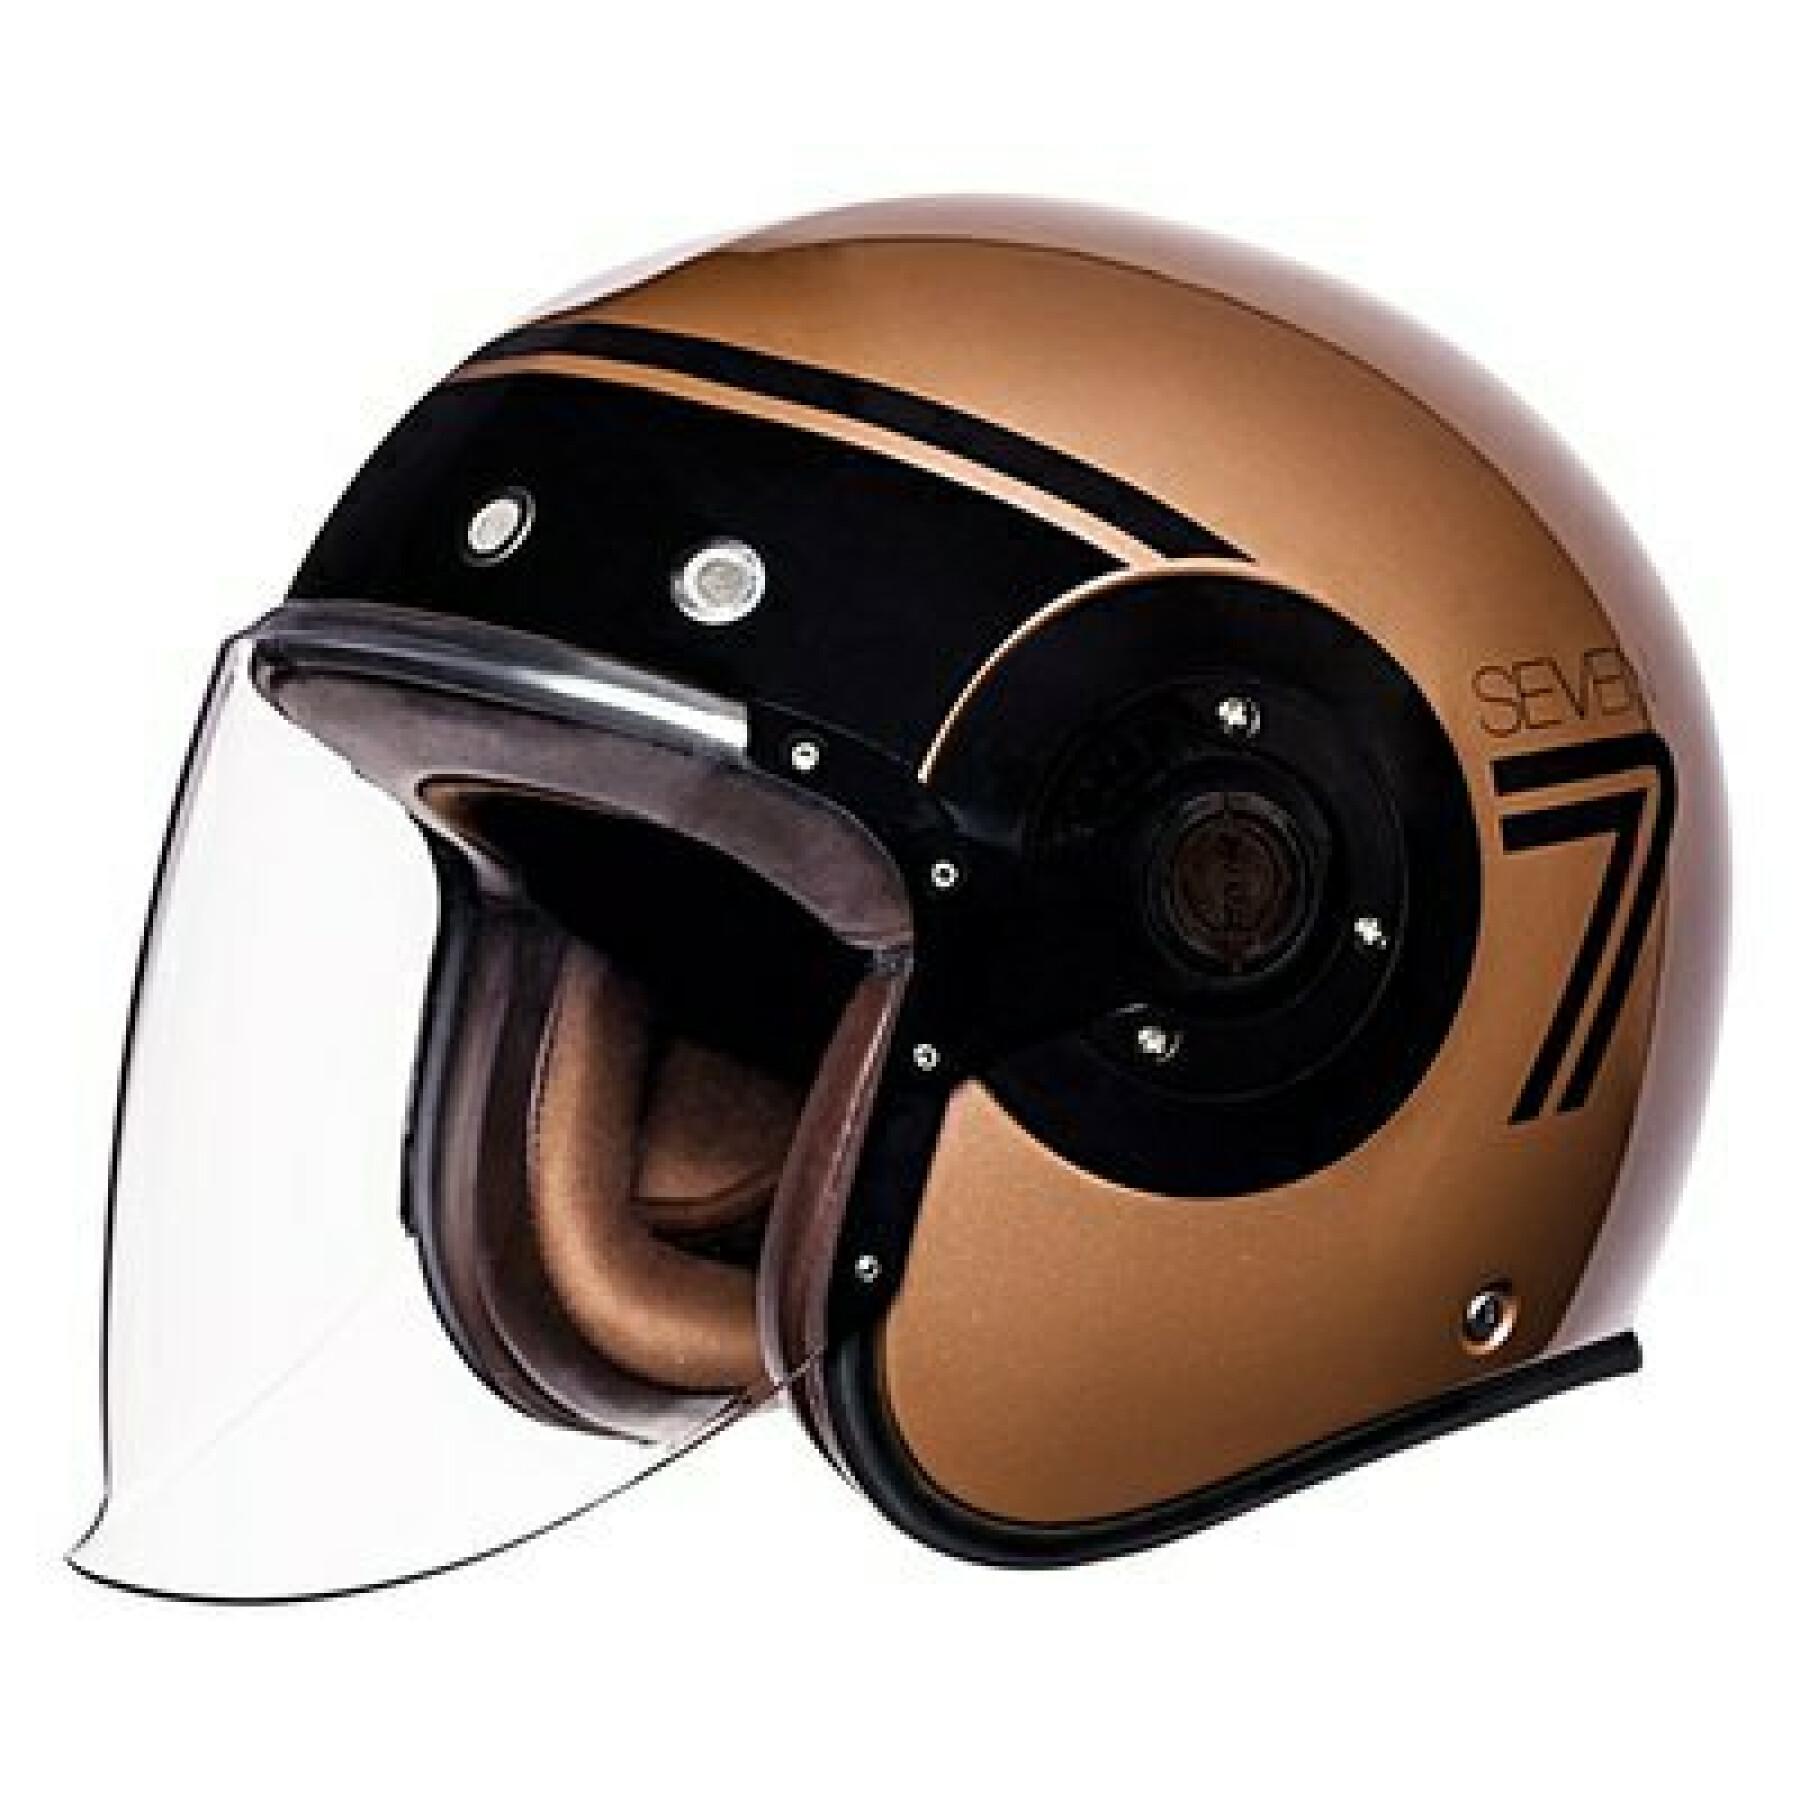 Jet motorcycle helmet SMK retro seven